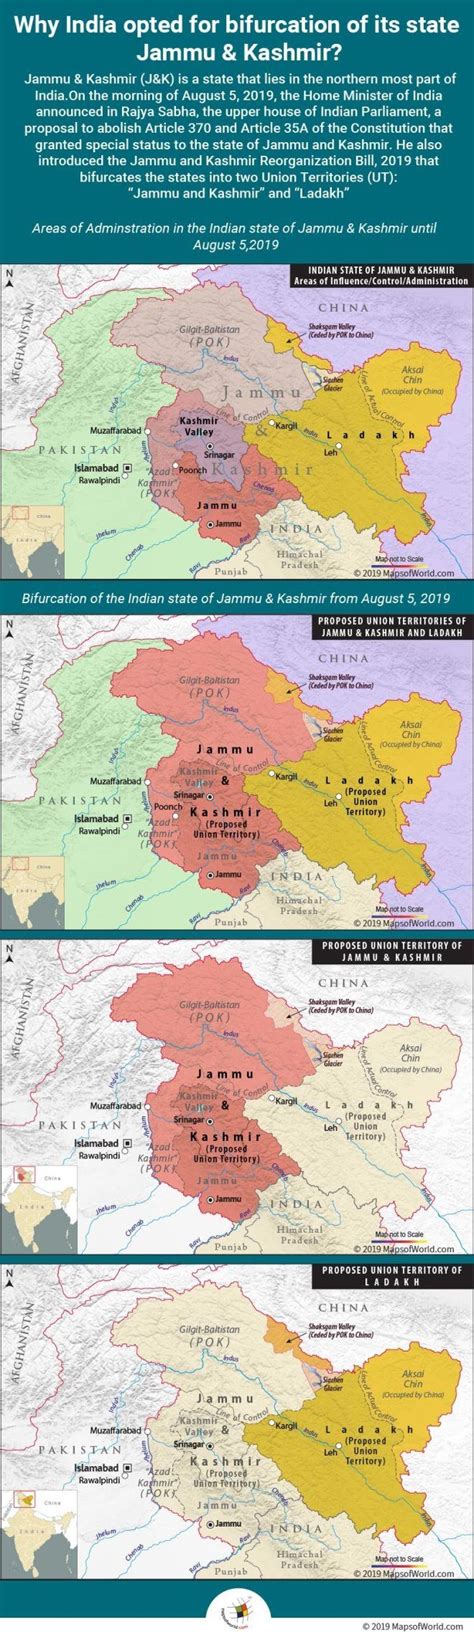 Bifurcation Of The Indian State Jammu And Kashmir Into 2 Union